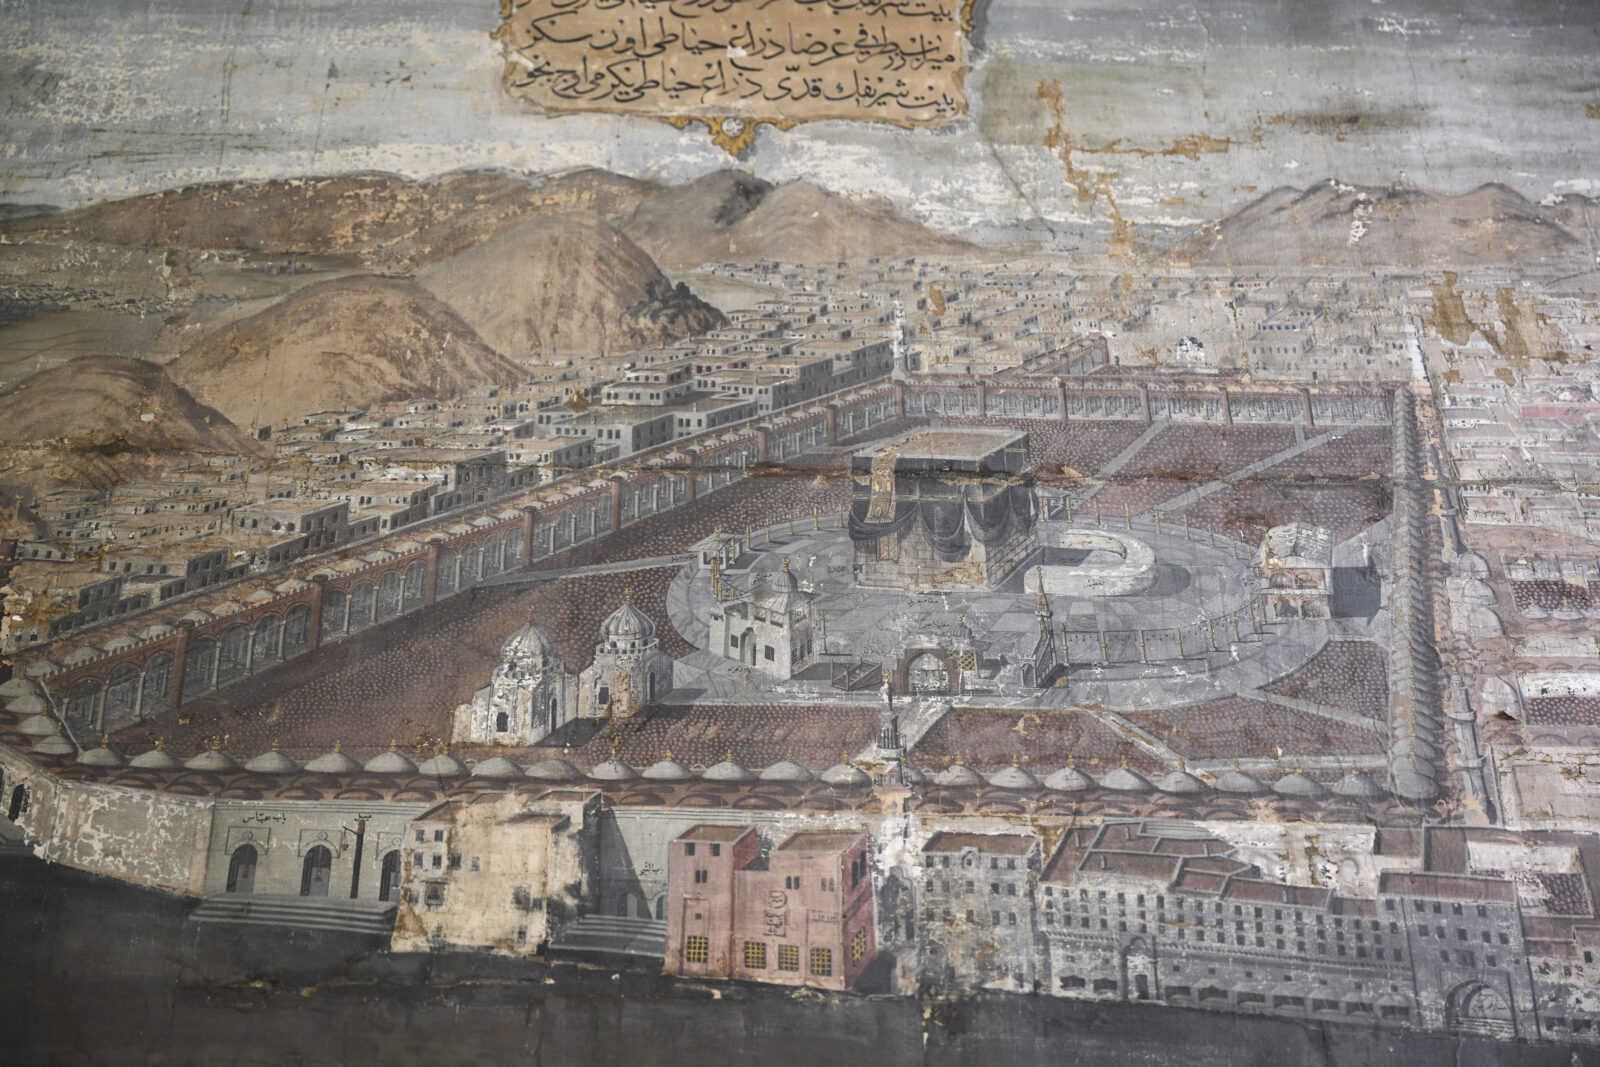 Historic Mecca, Medina paintings undergo restoration at Topkapi Palace